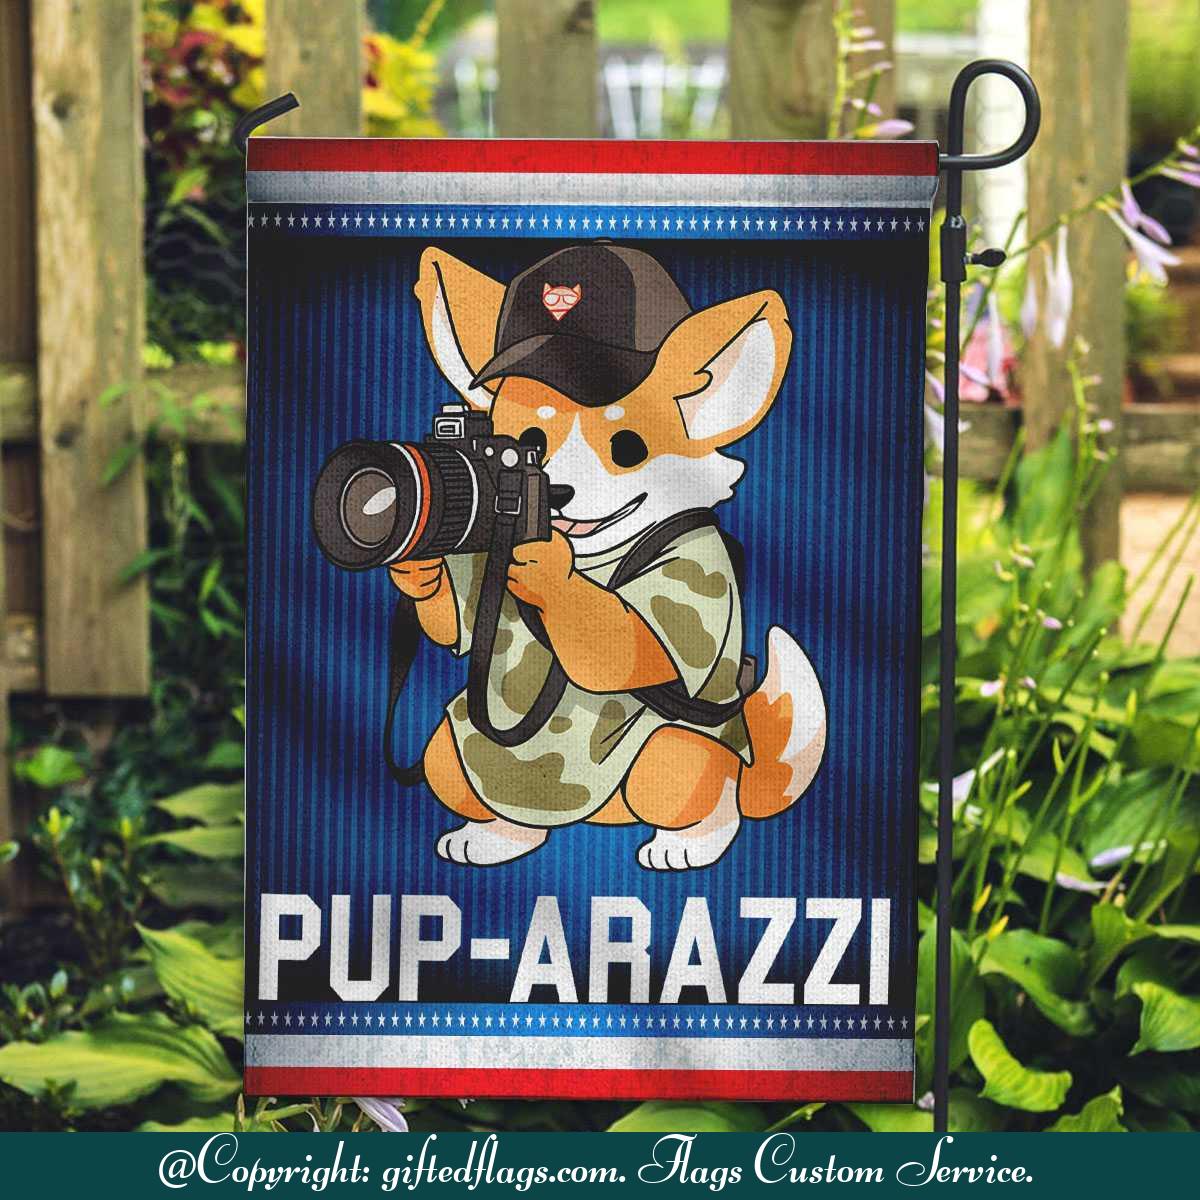 https://service.giftedflags.com/uploads/2612/flag/corgi-pup-arazzi-funny-dog-photographer-garden-flag.jpg